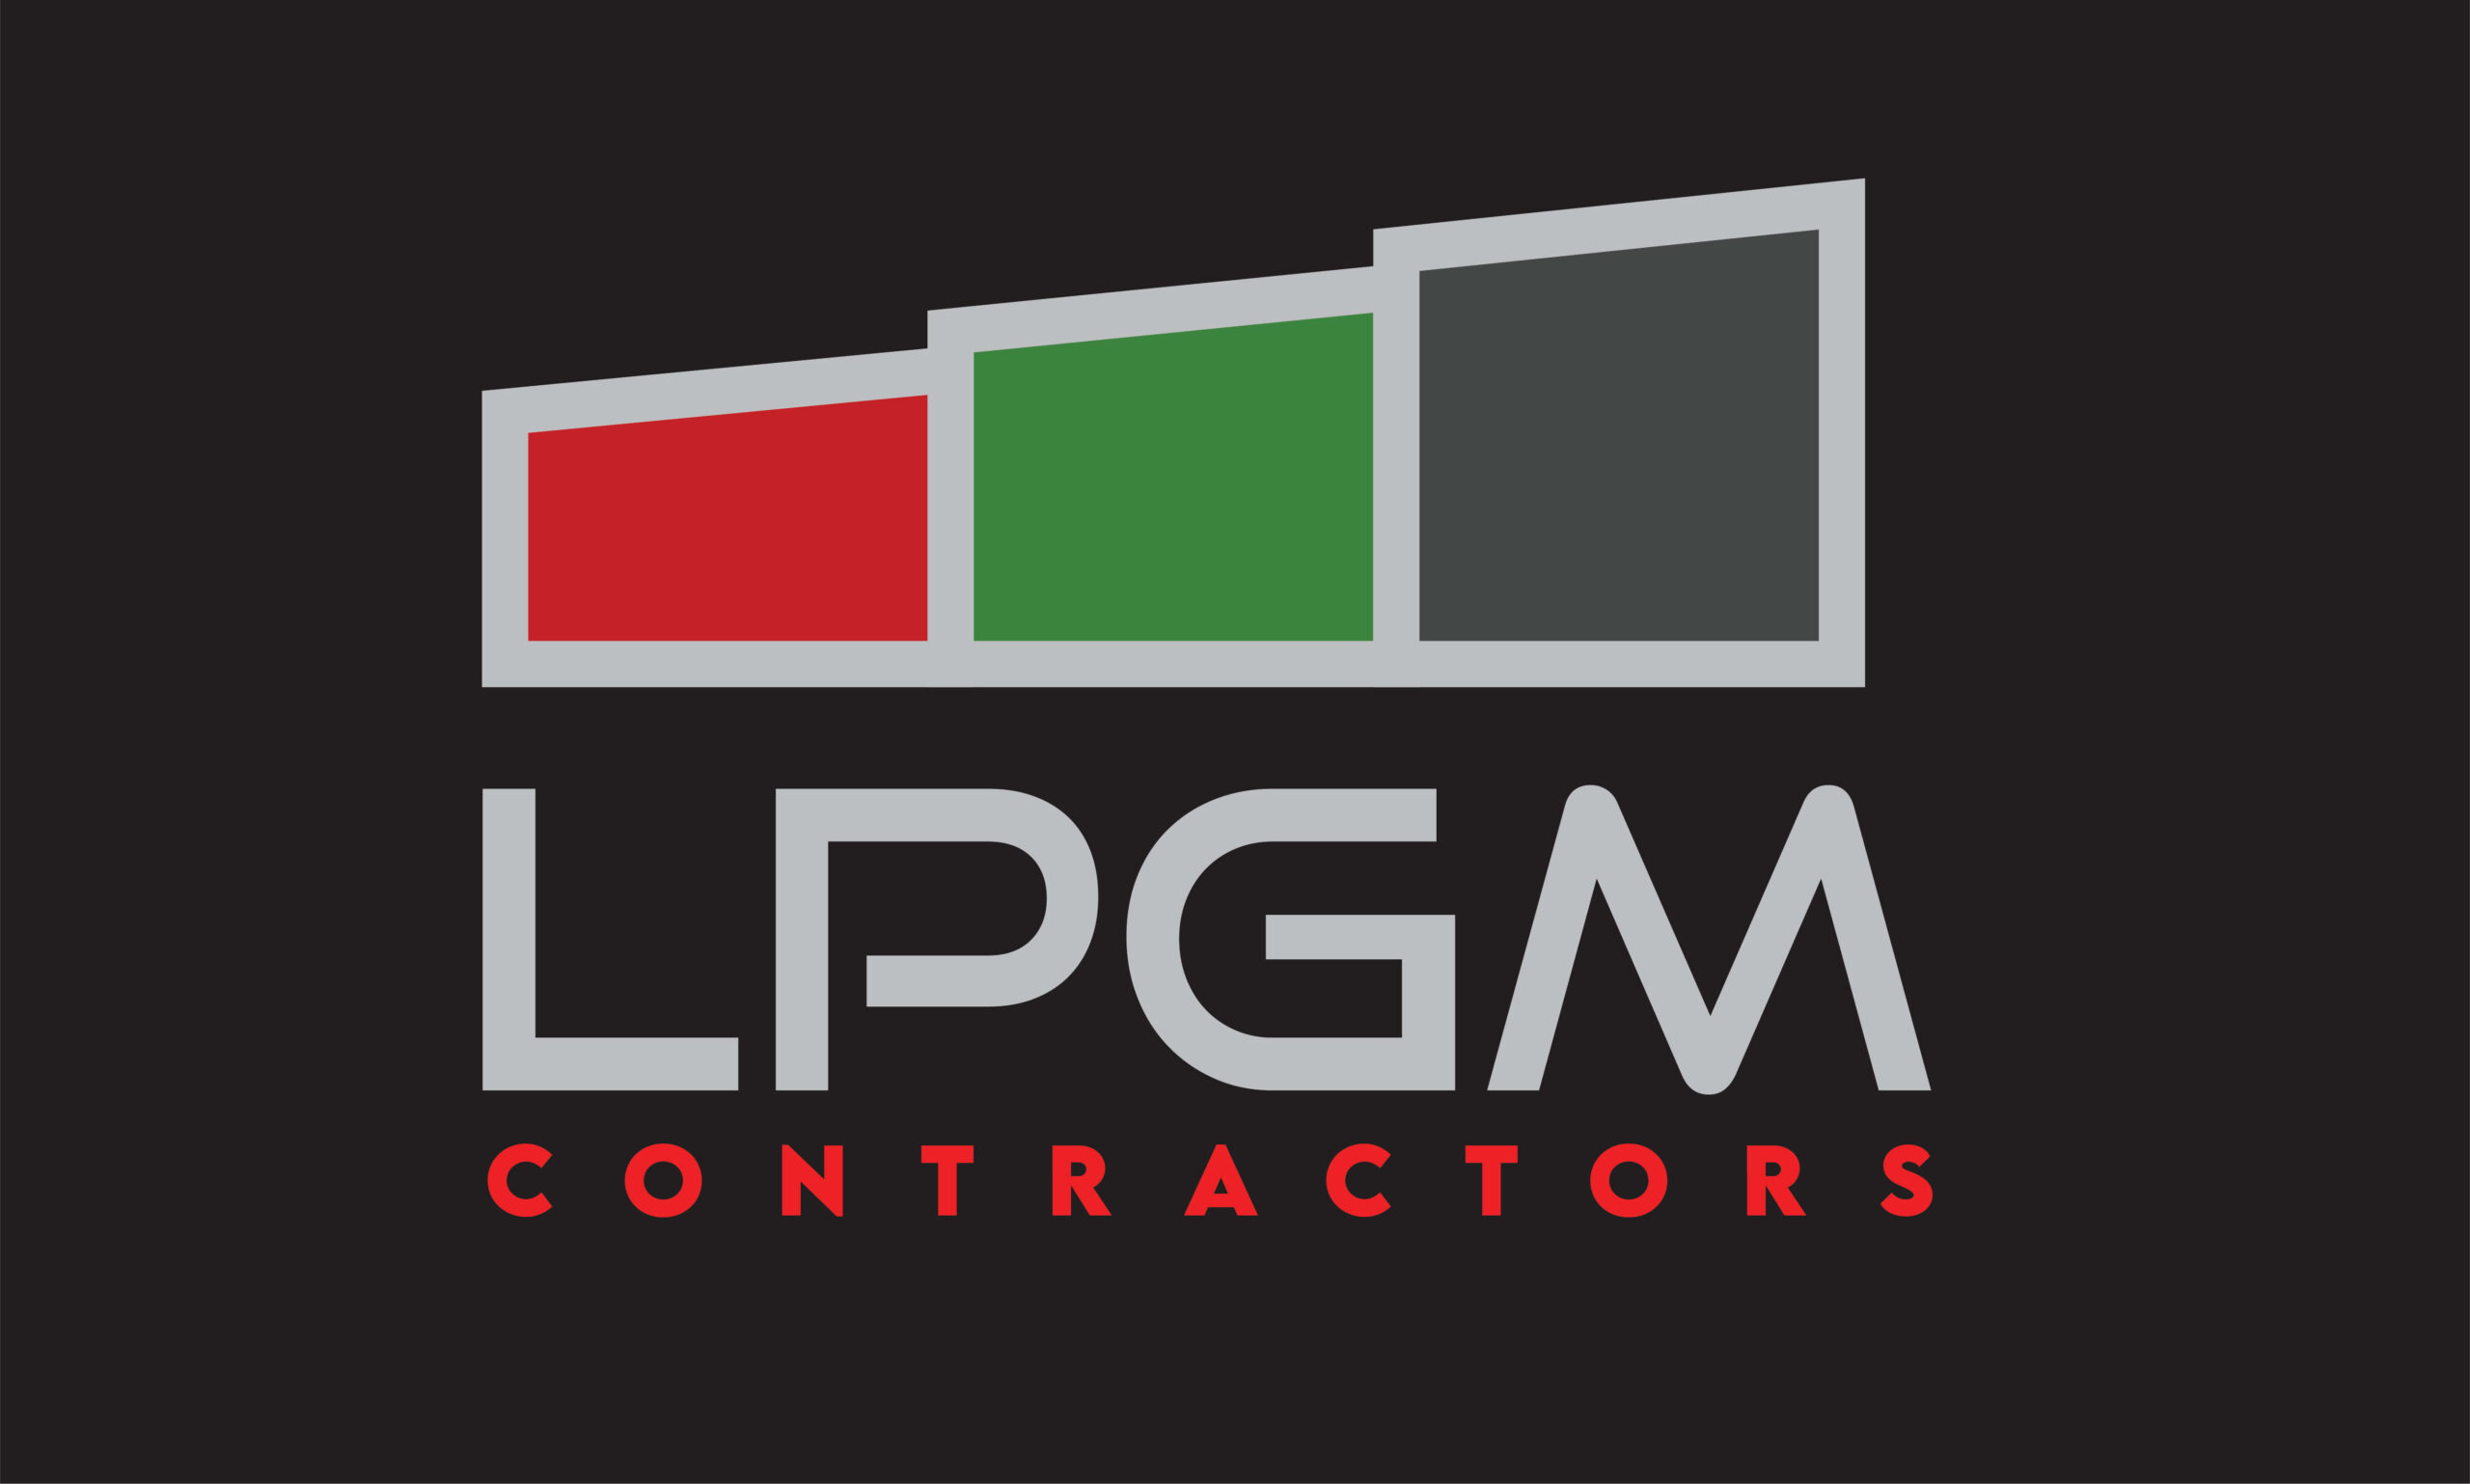 LPGM Contractors